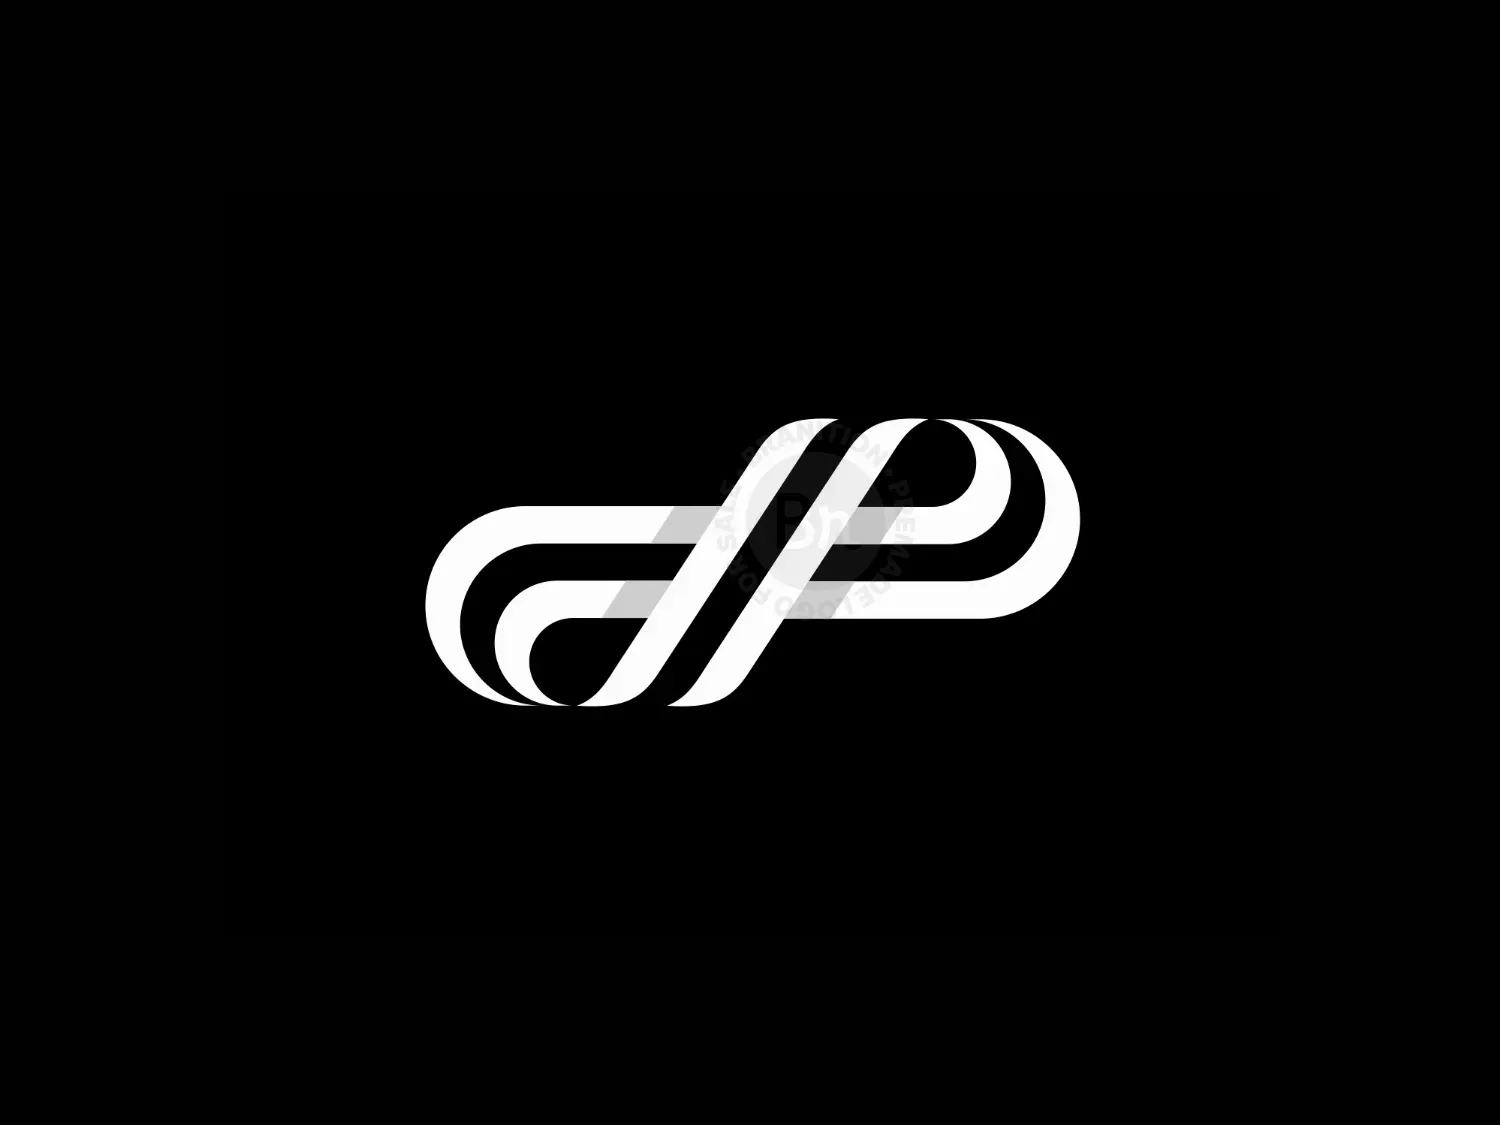 Creative Photography DP Letter Logo Design - TemplateMonster